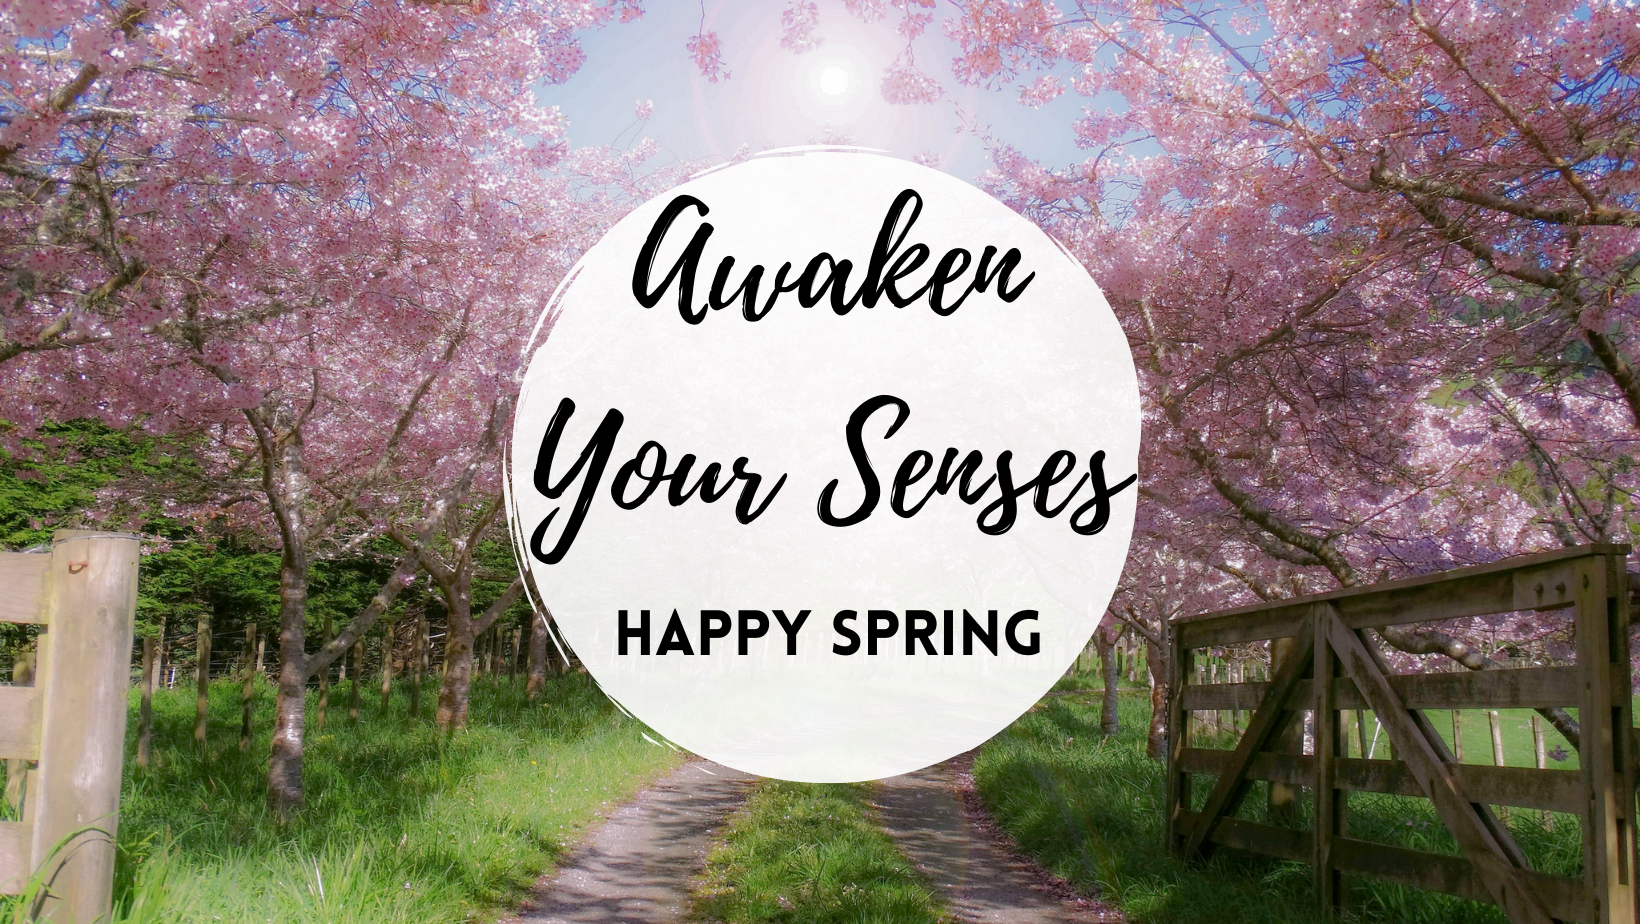 Awaken your Senses - Happy Spring